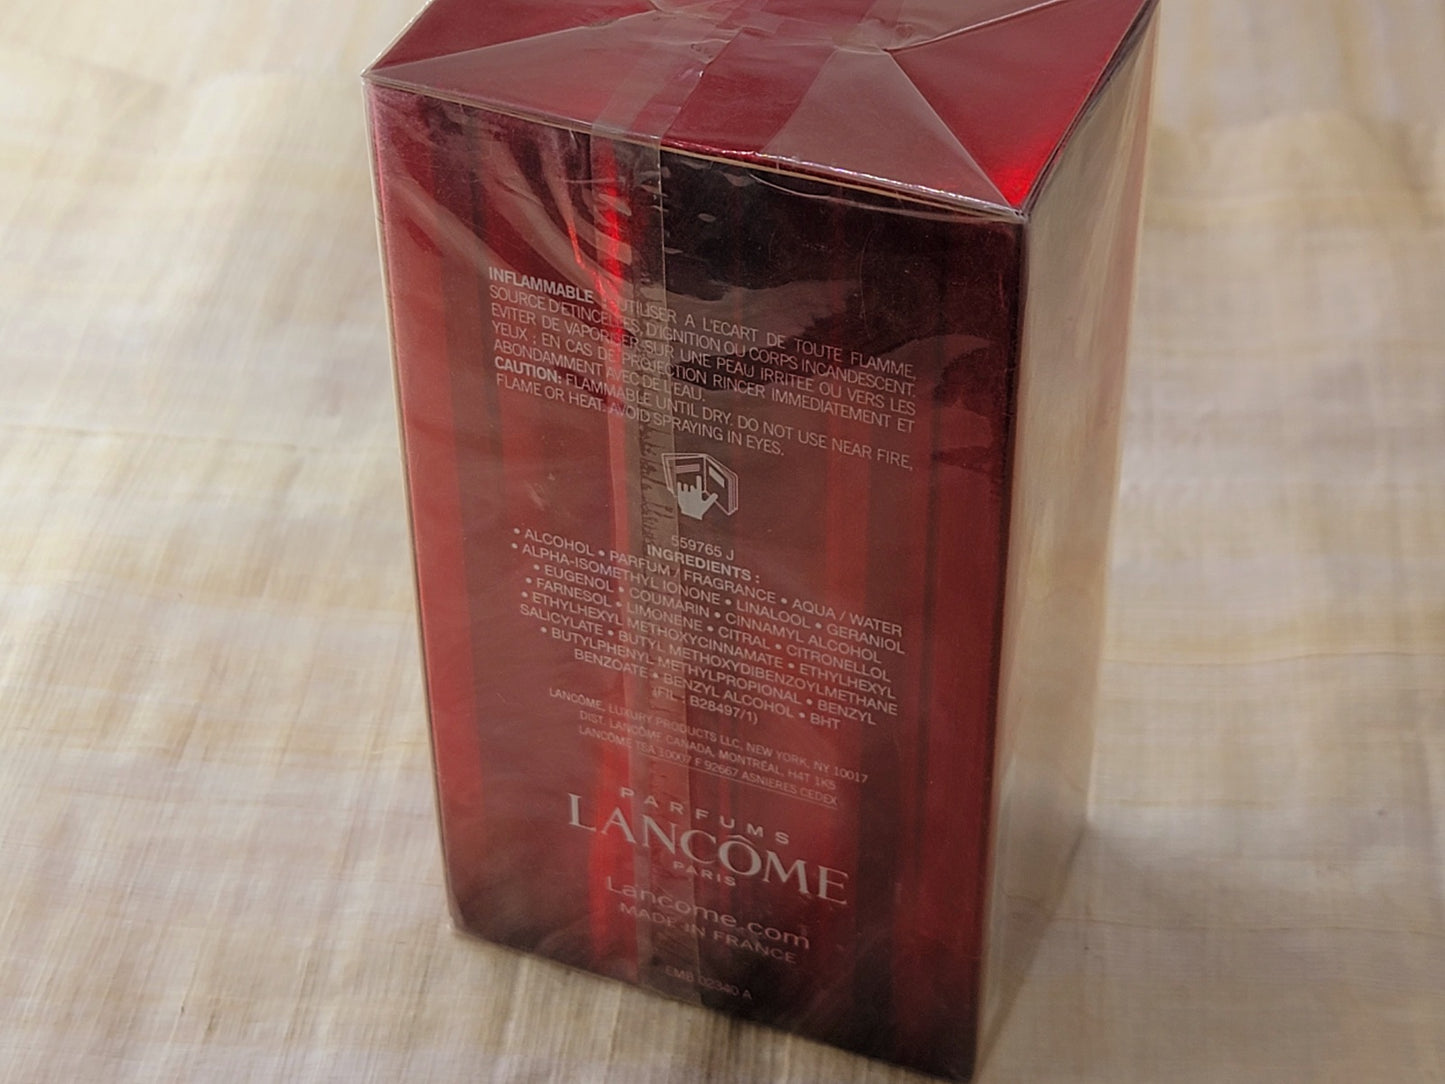 Magnifique Lancôme for women EDP Spray 50 ml 1.7 oz, Vintage, Rare, Sealed